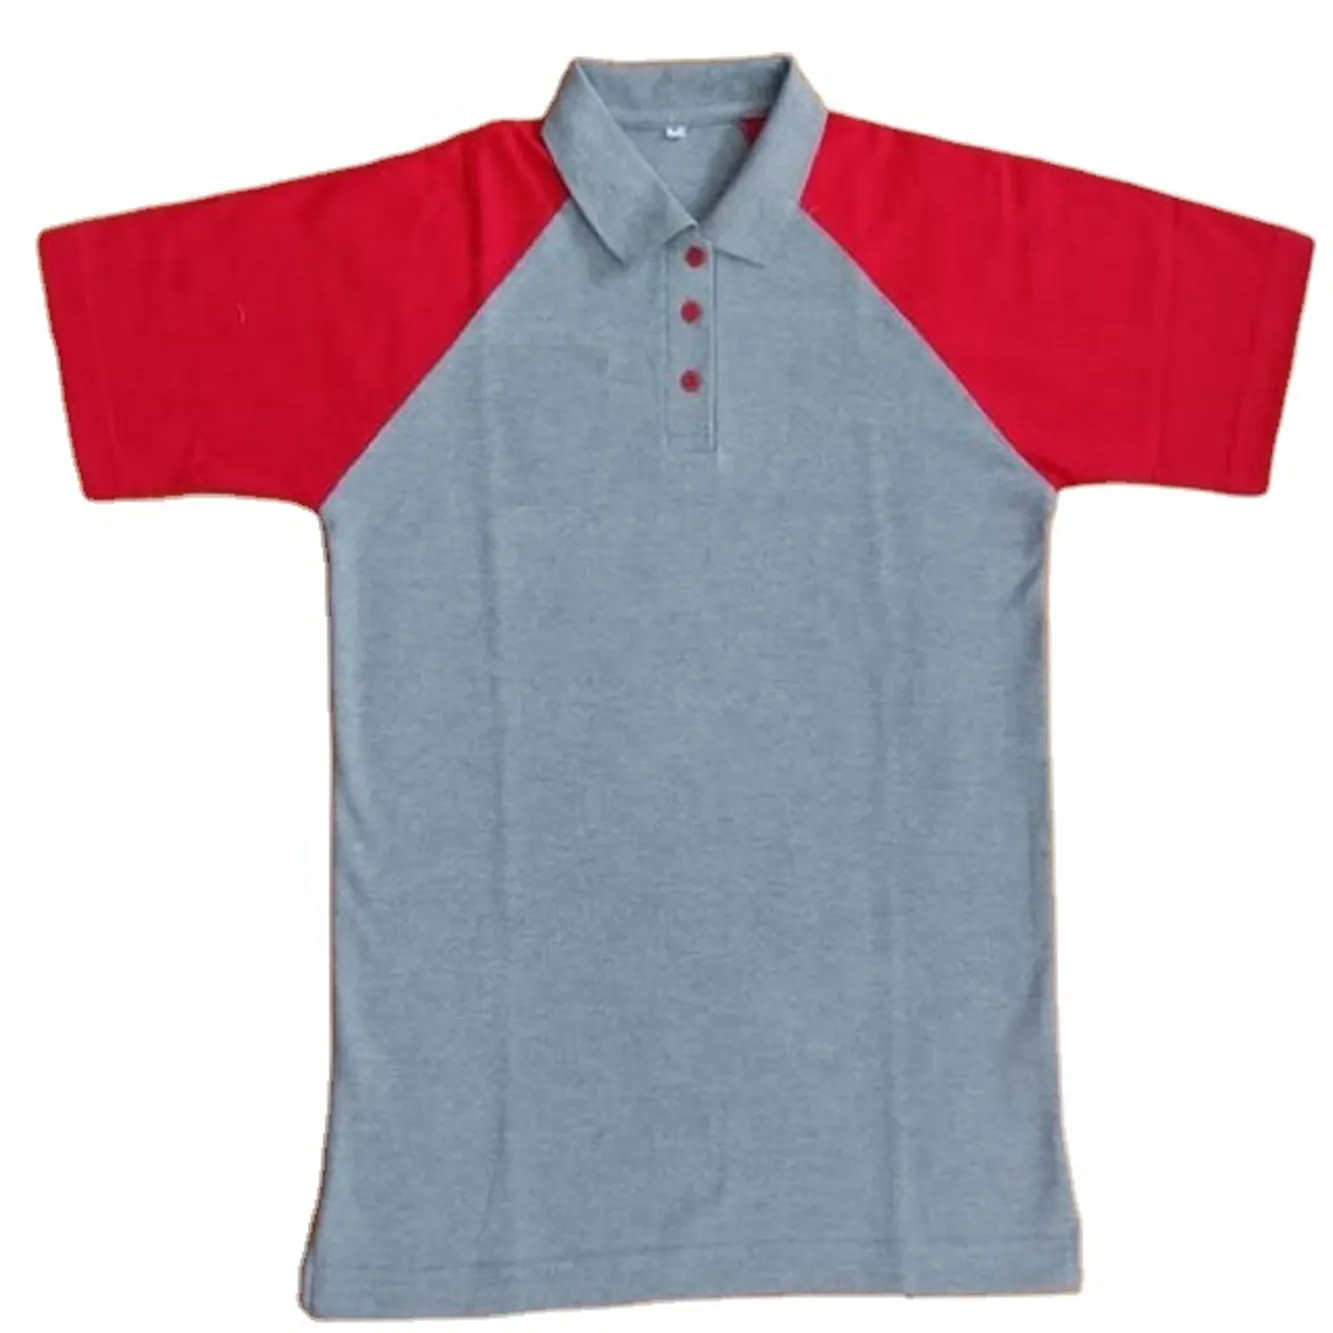 Großhandel Günstiger Preis Gute Qualität Baumwolle T-Shirt Herren bekleidung Wear Custom Design Kleid Polo T-Shirt Casual Wear Büro kleid